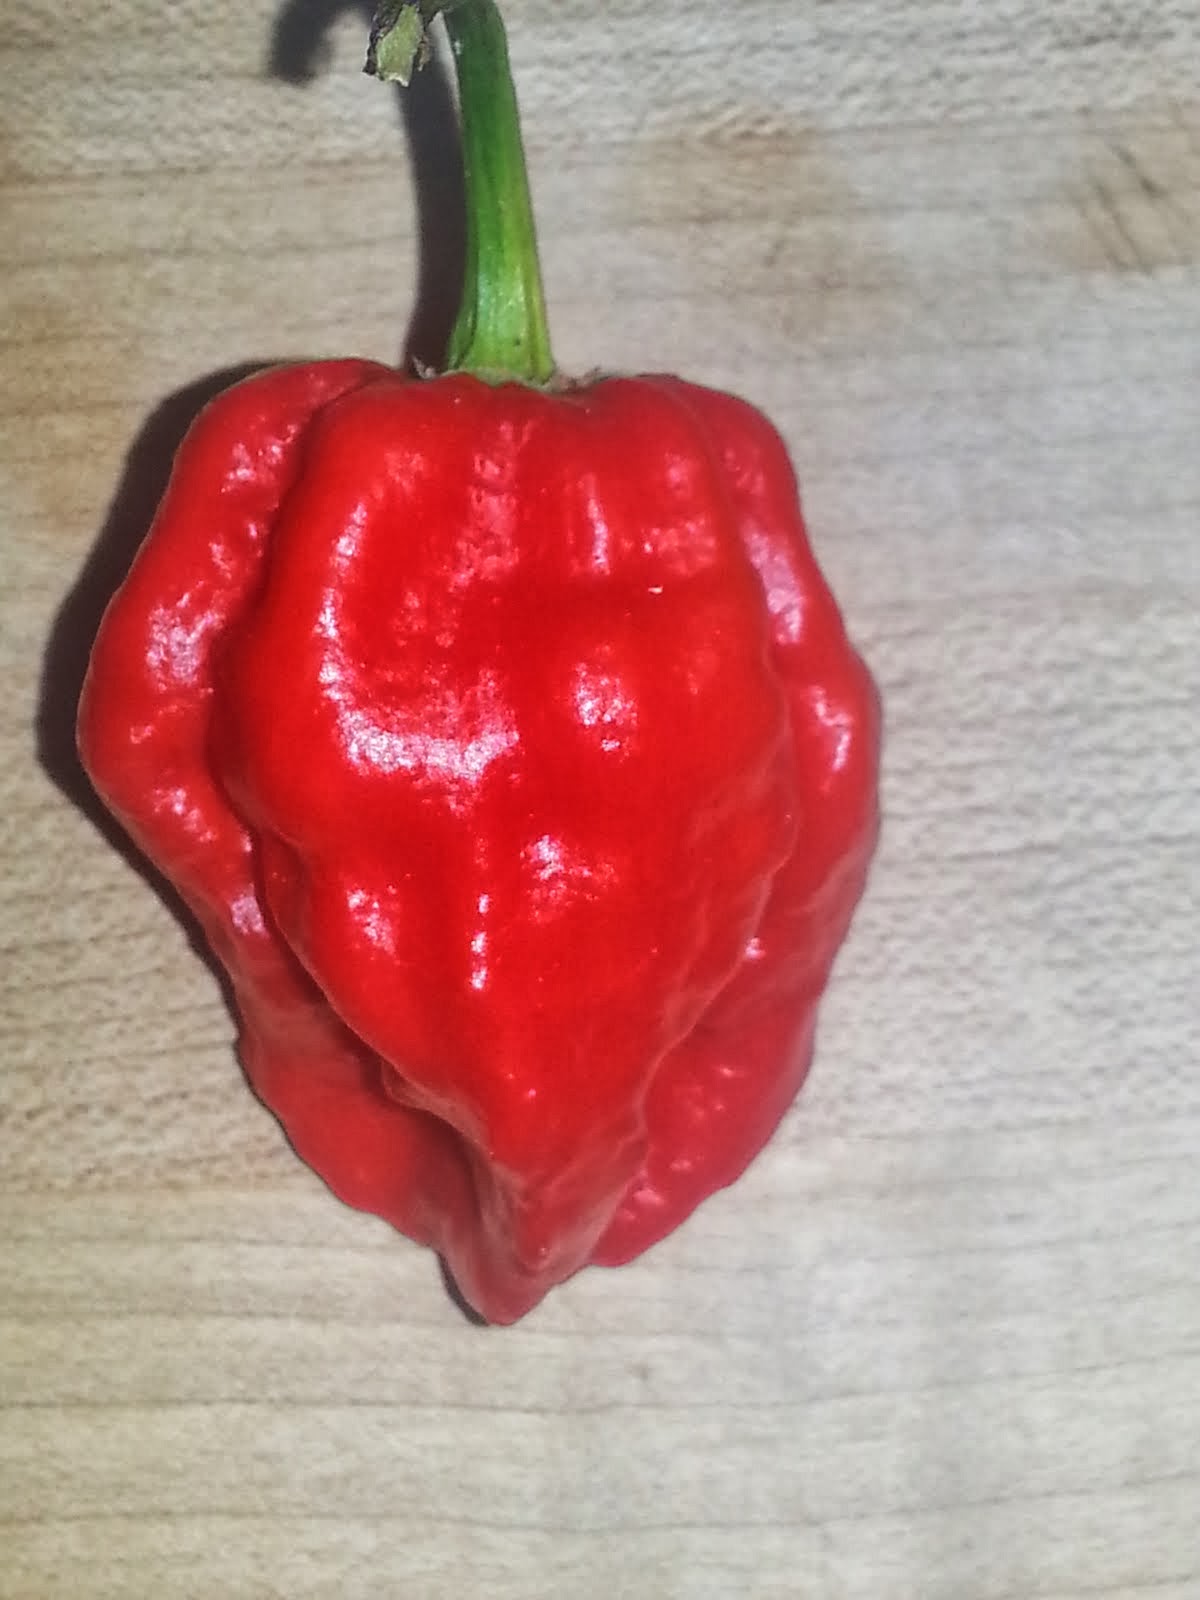 Trinidad Red Scorpion Pepper